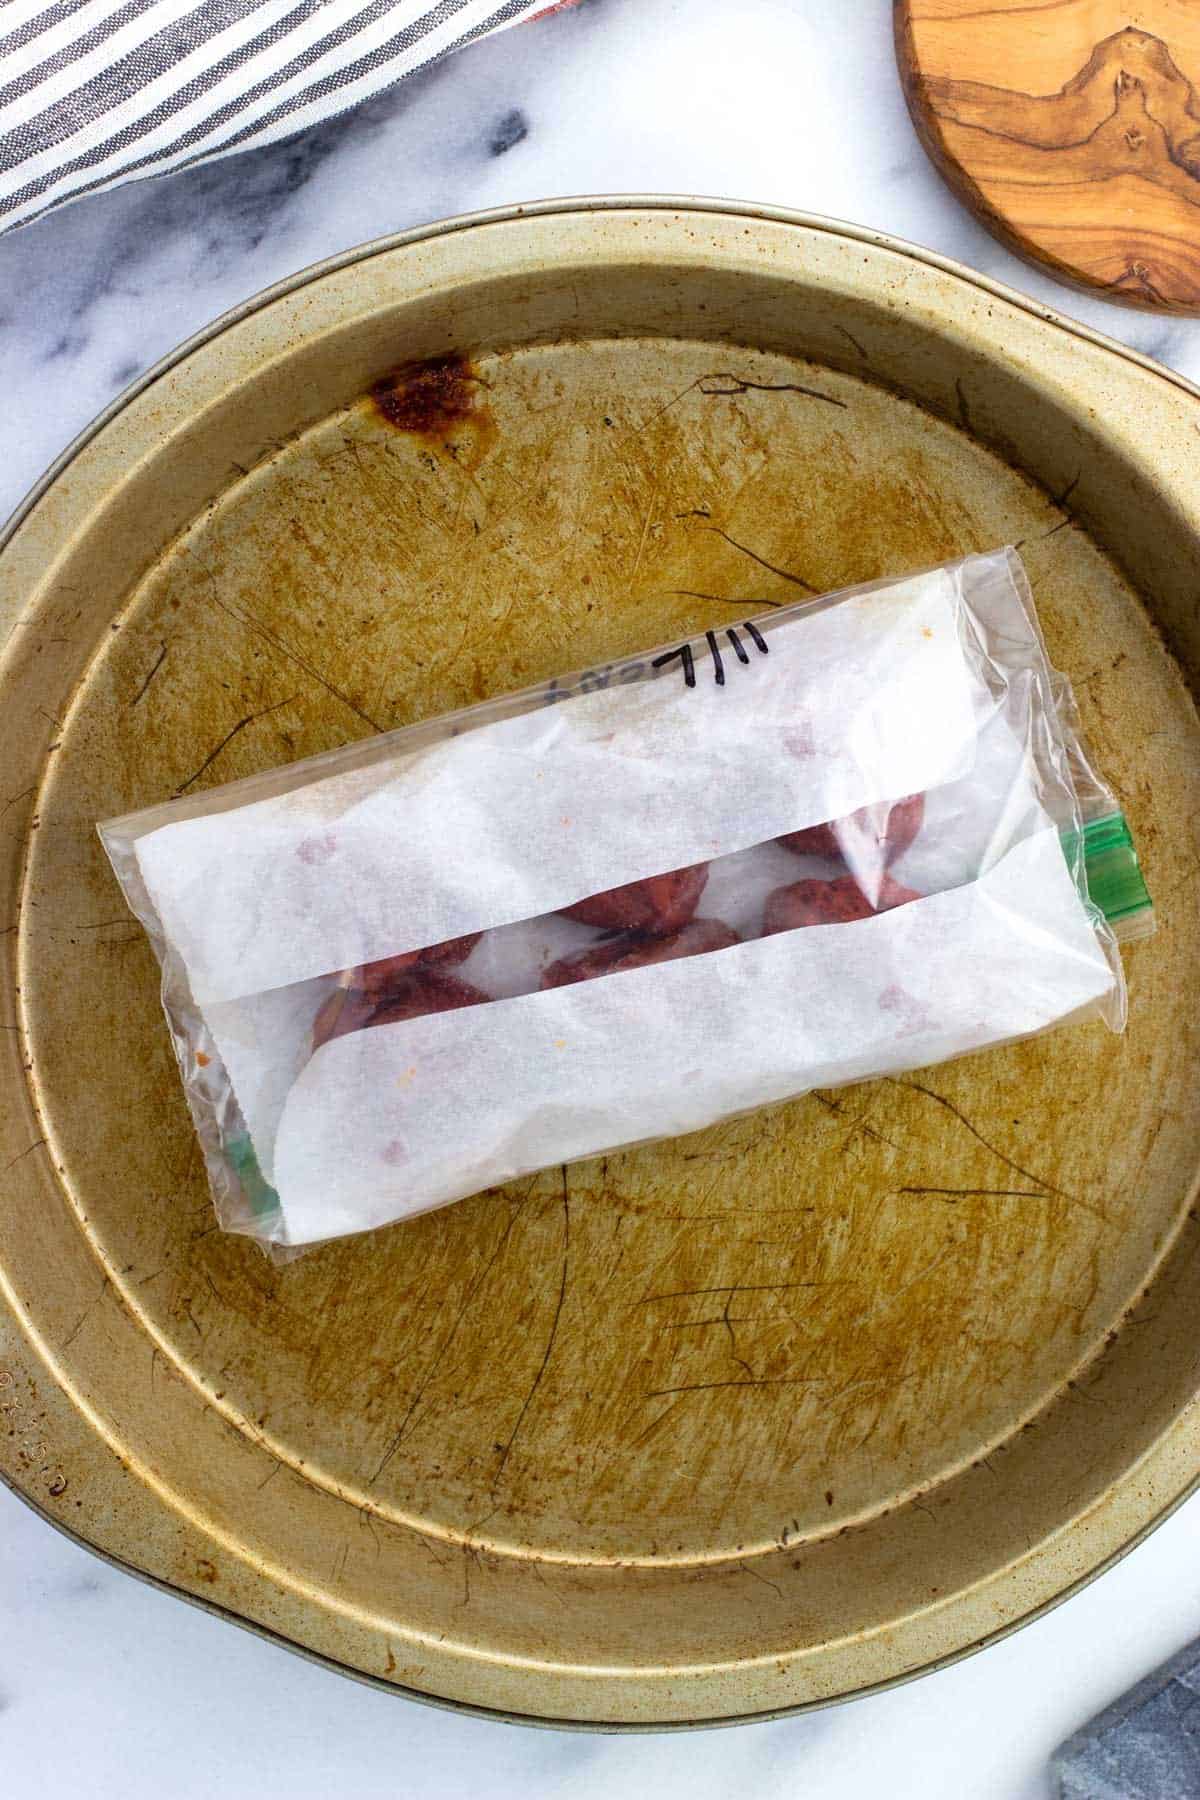 Frozen tomato paste blobs in a plastic bag.